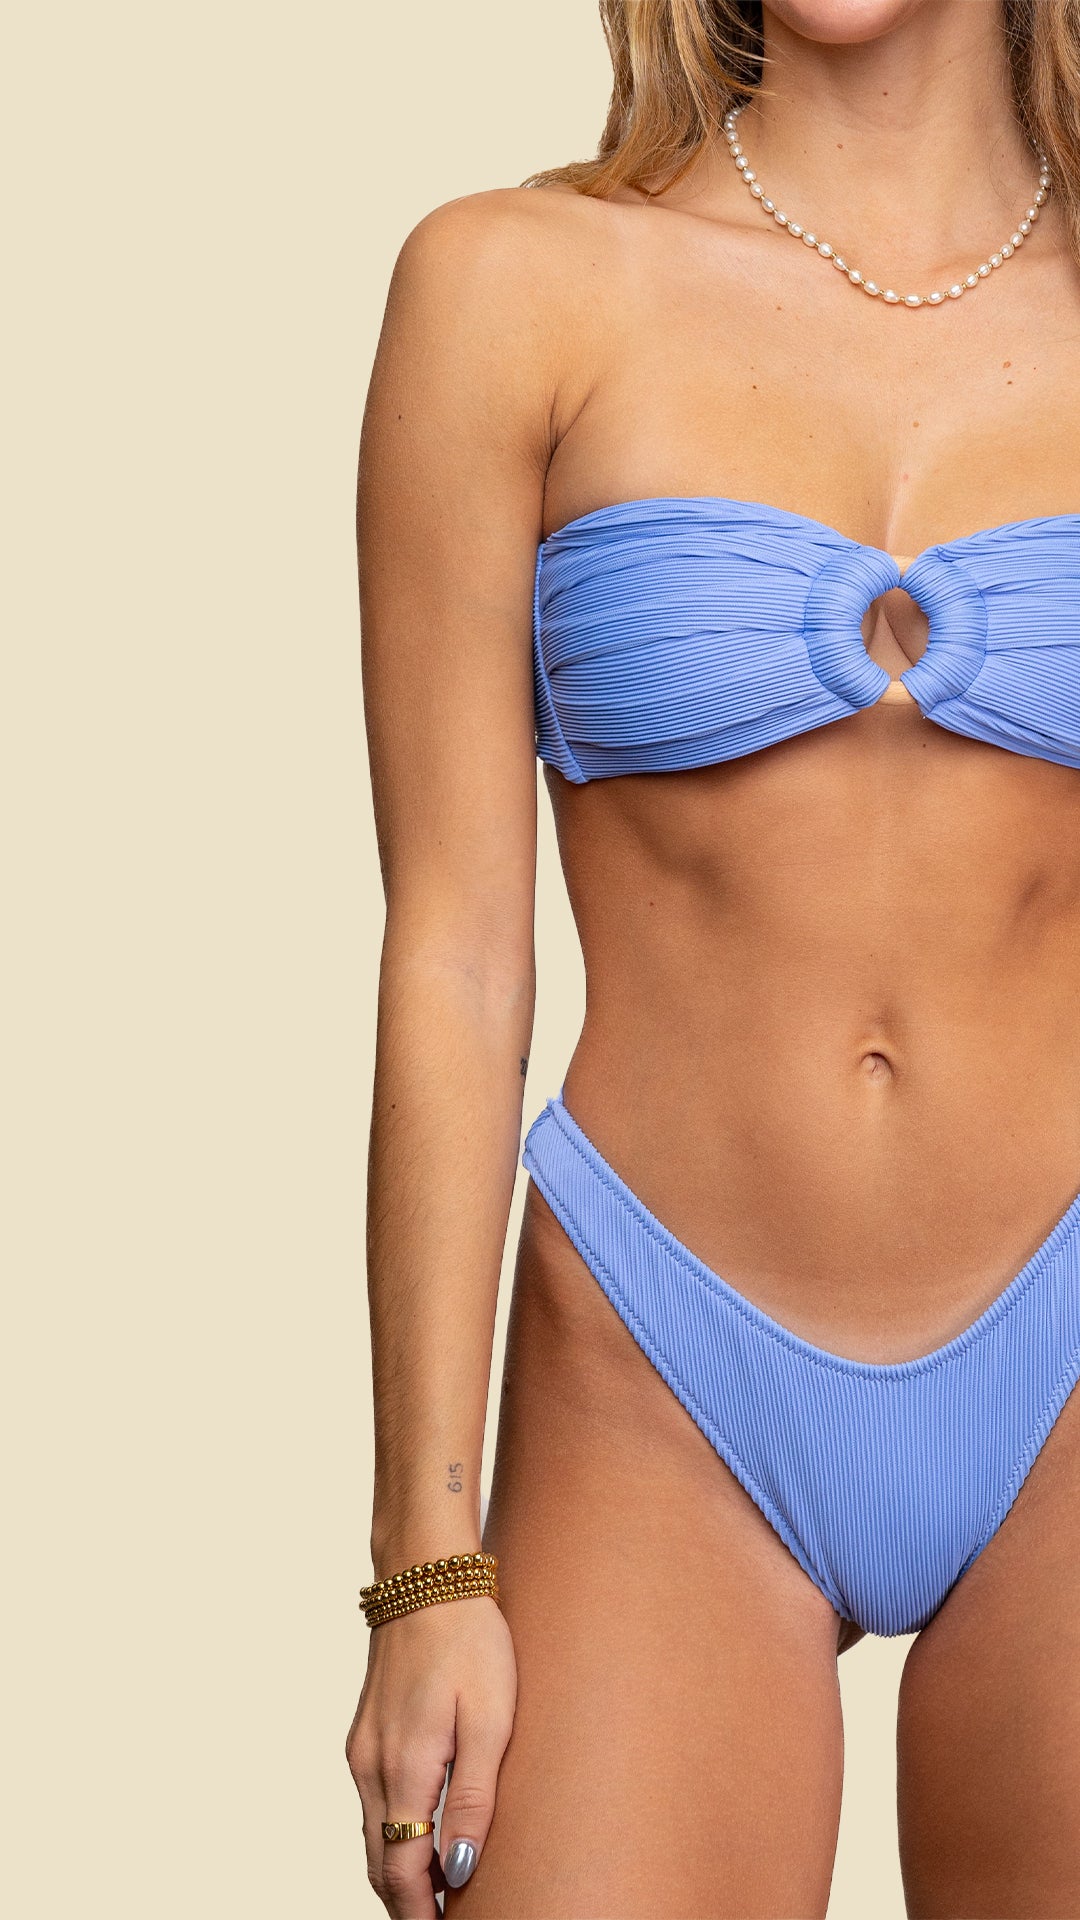 SELONE Plus Size Swimsuit for Women 3 Piece Bikini Tube Top